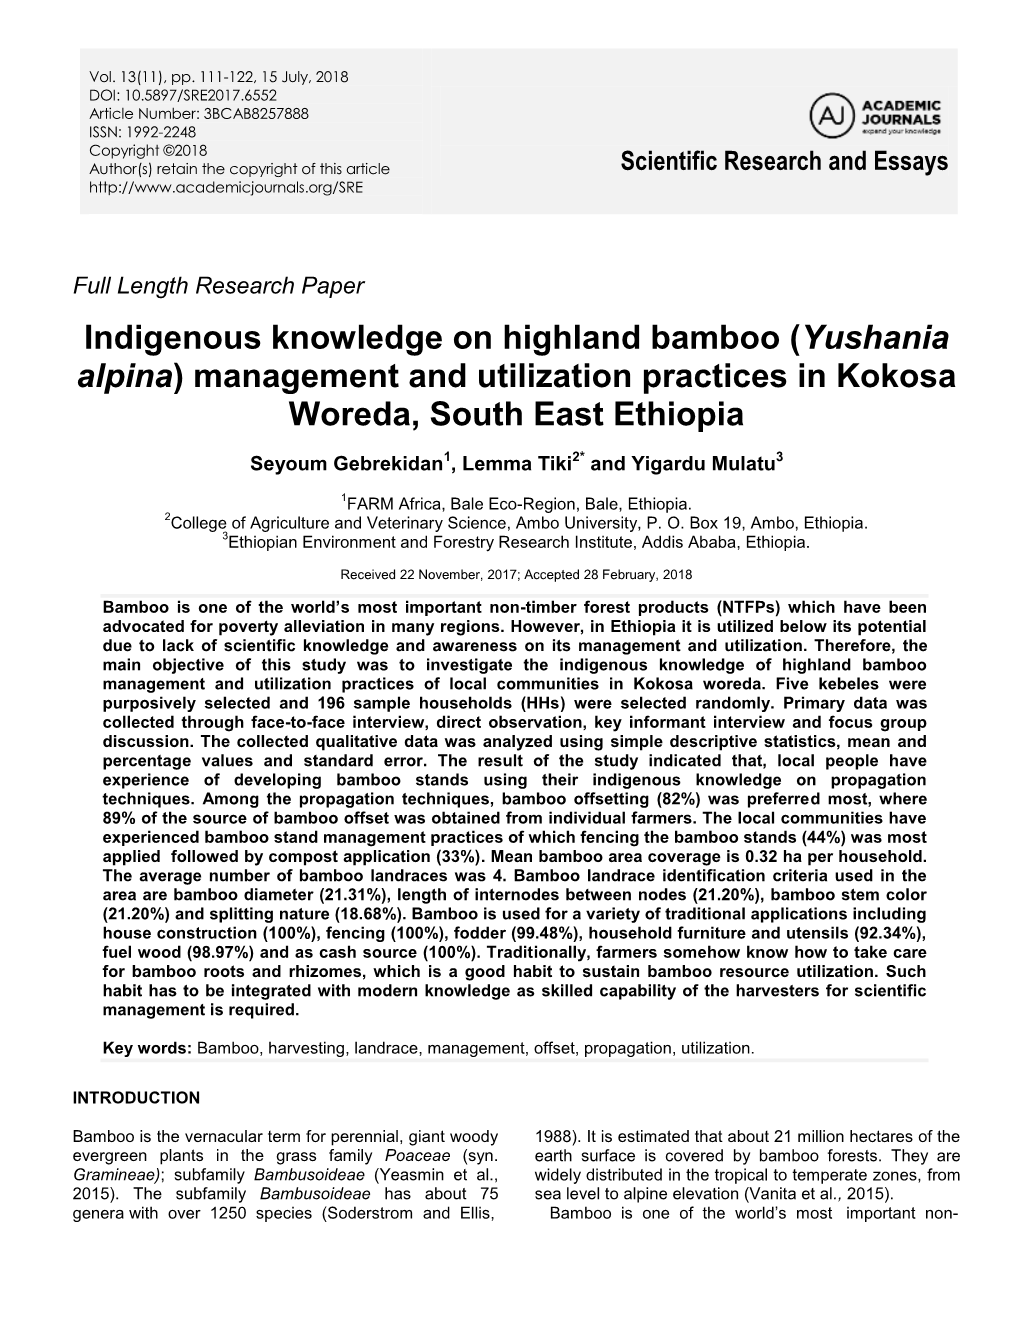 Indigenous Knowledge on Highland Bamboo (Yushania Alpina) Management and Utilization Practices in Kokosa Woreda, South East Ethiopia